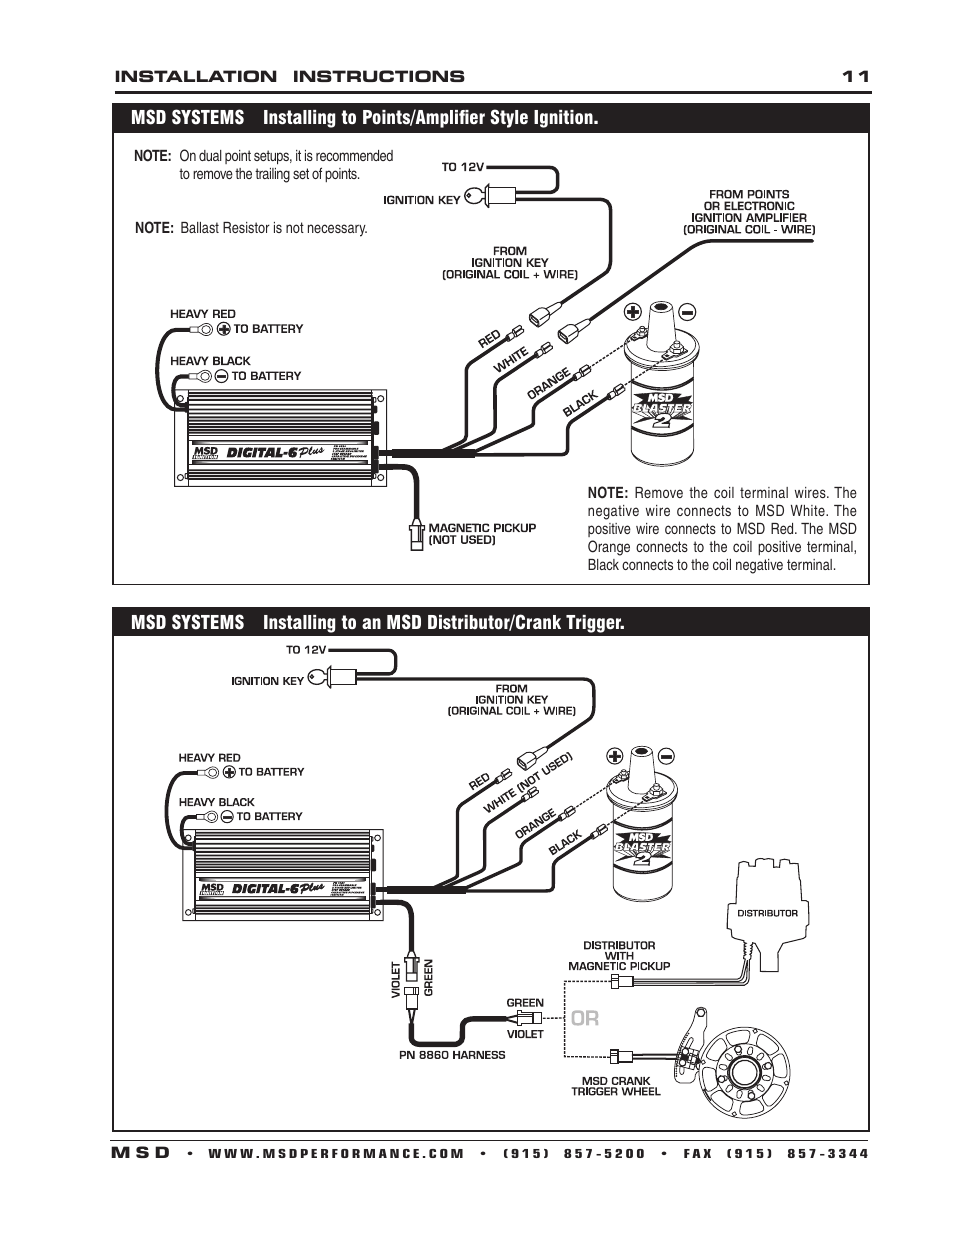 MSD 6520 Digital 6-Plus Ignition Control Installation User Manual